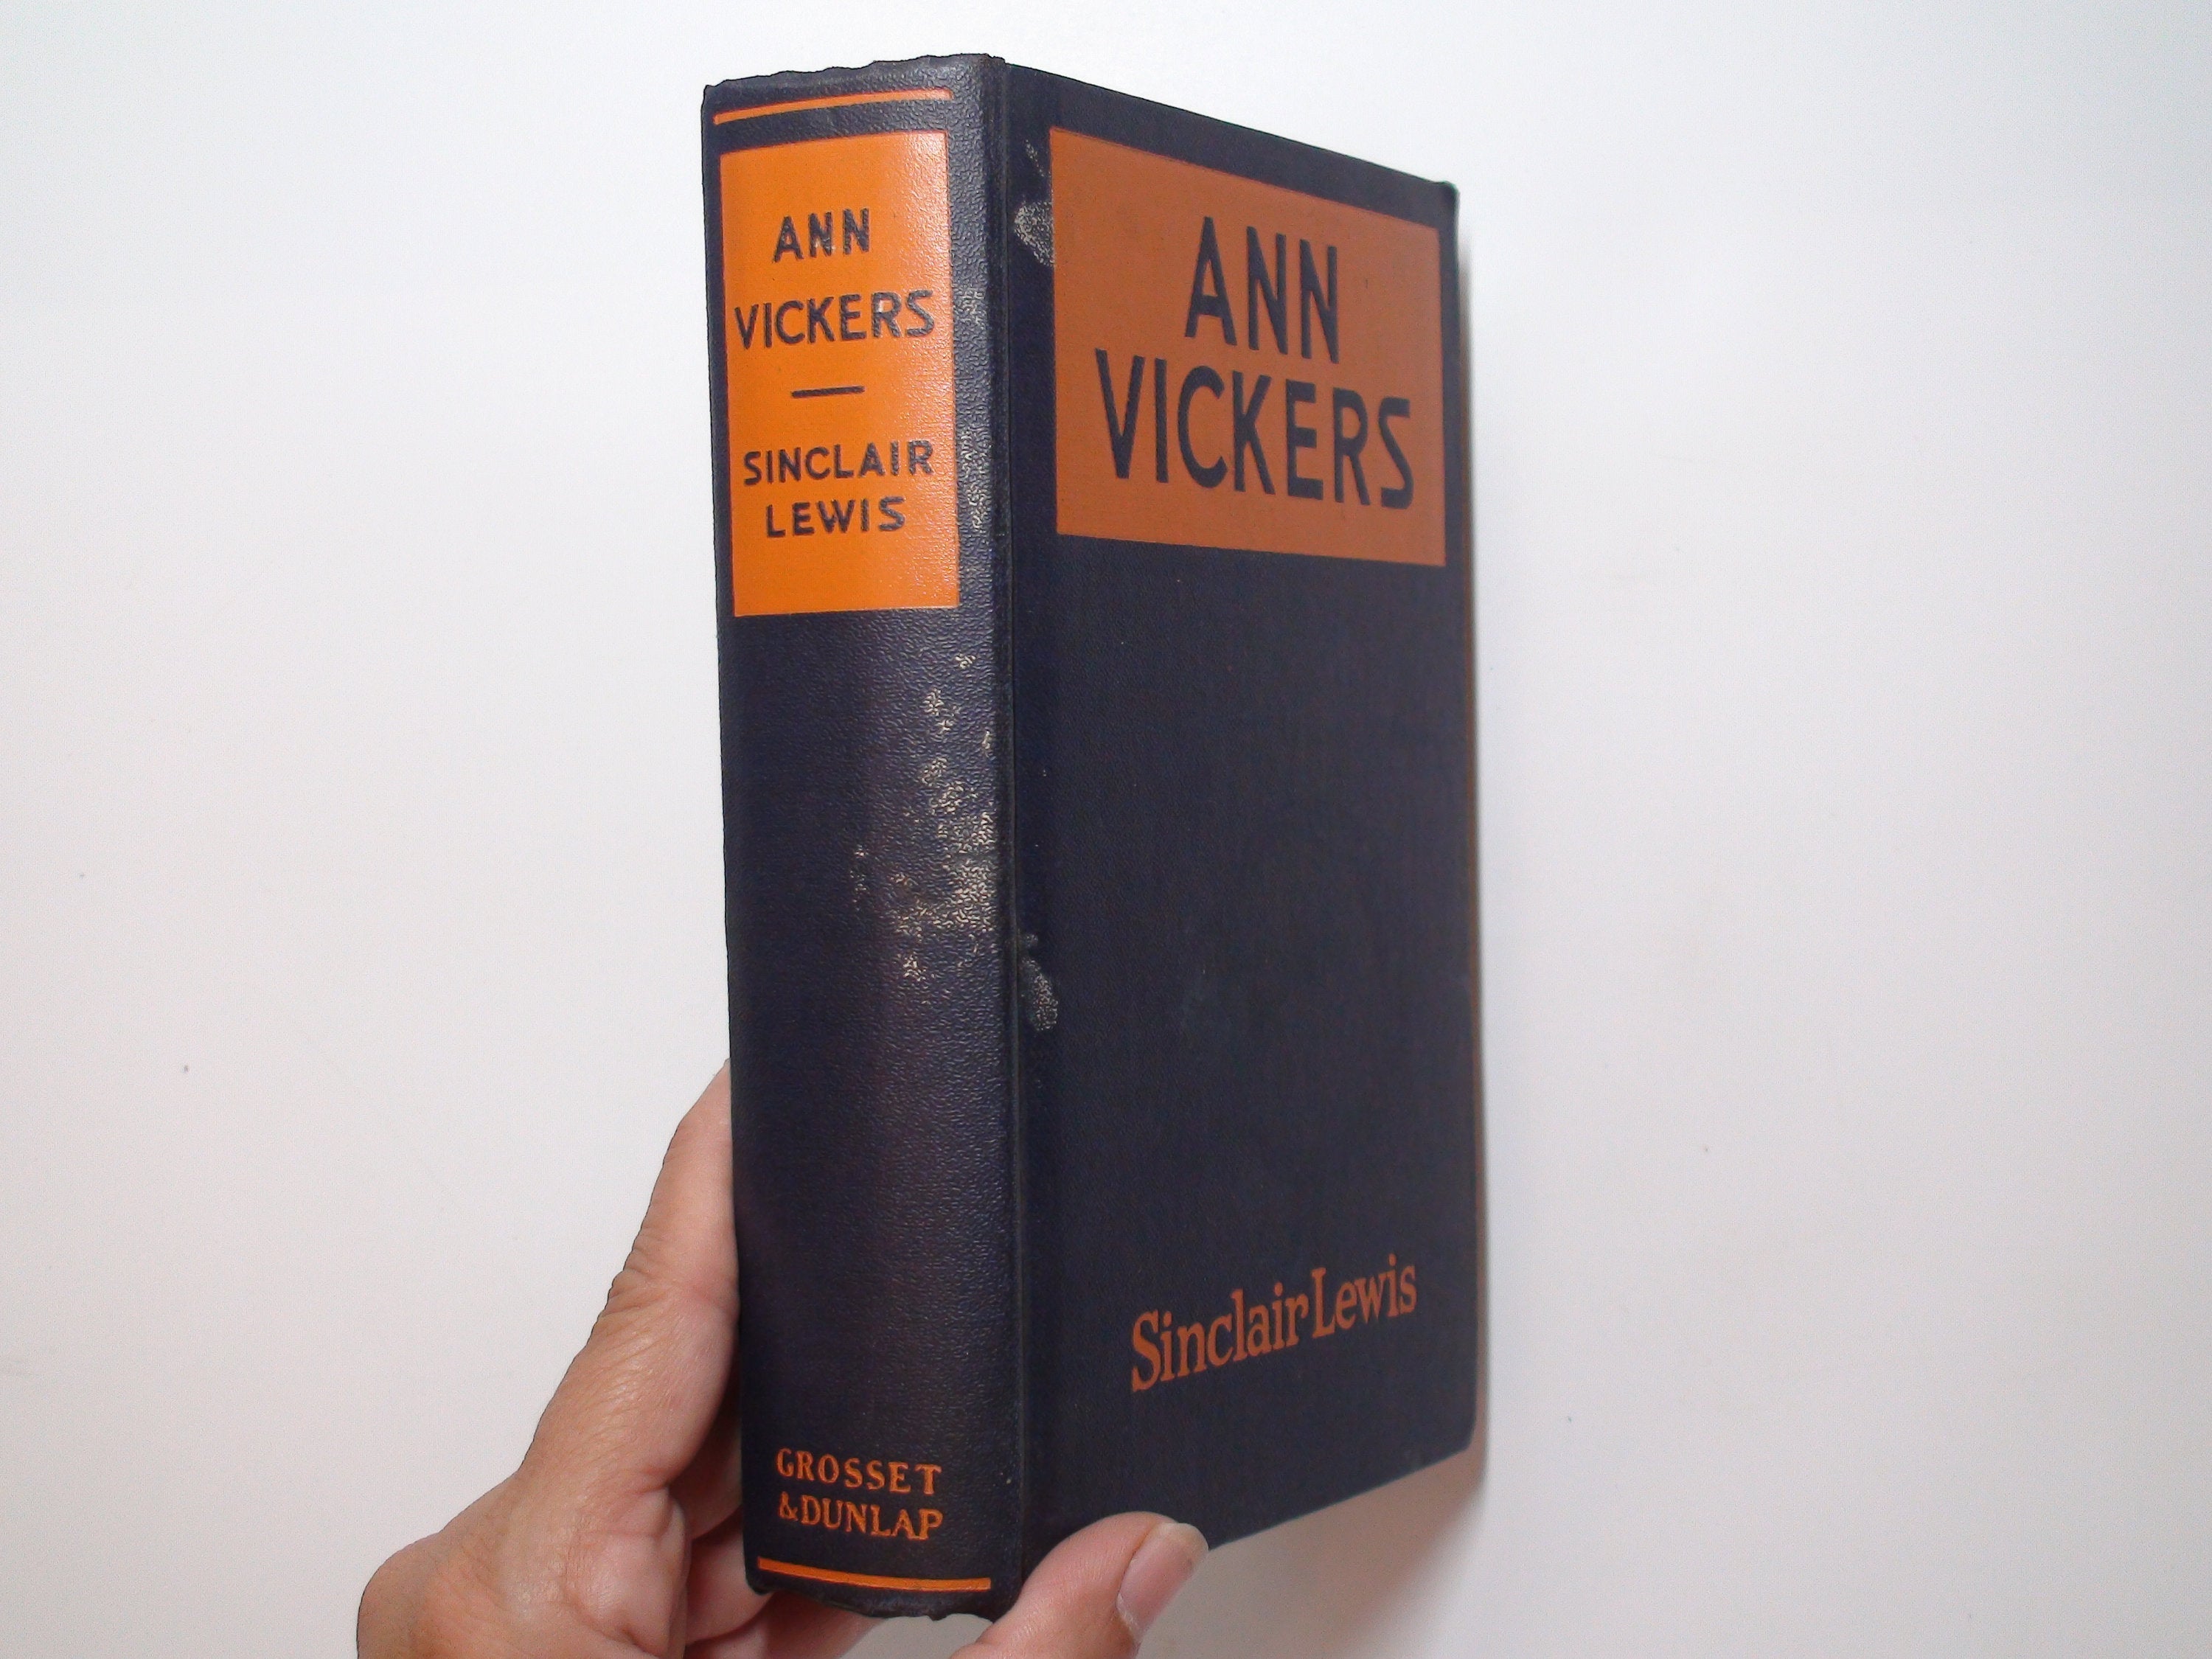 Ann Vickers by Sinclair Lewis, Grosset & Dunlap, 1st Ed, 1933